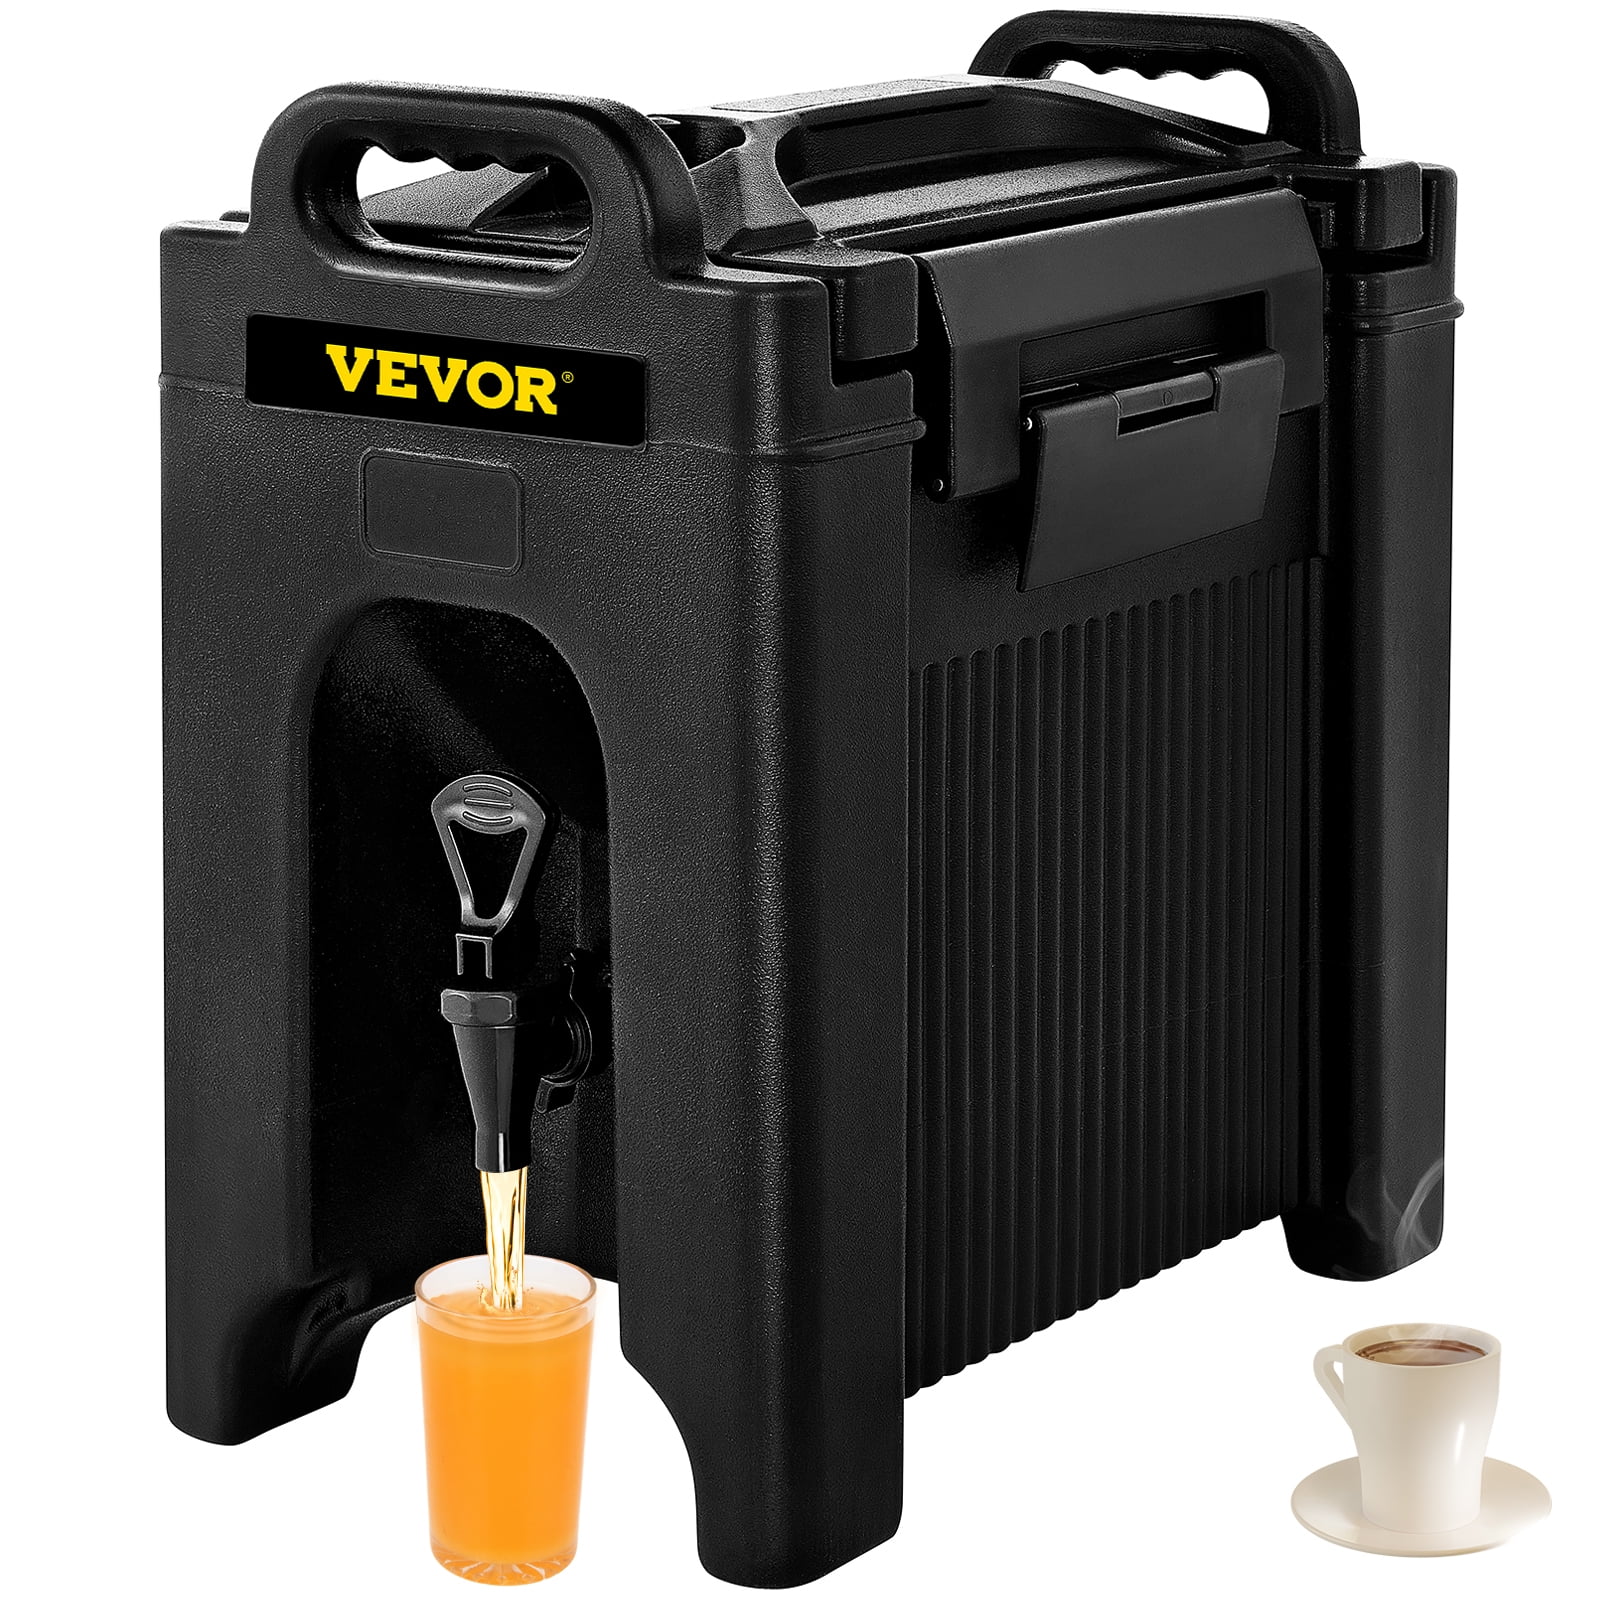 Beverage Dispenser VEVOR Size: 14.6 H x 9.4 W x 9.4 D